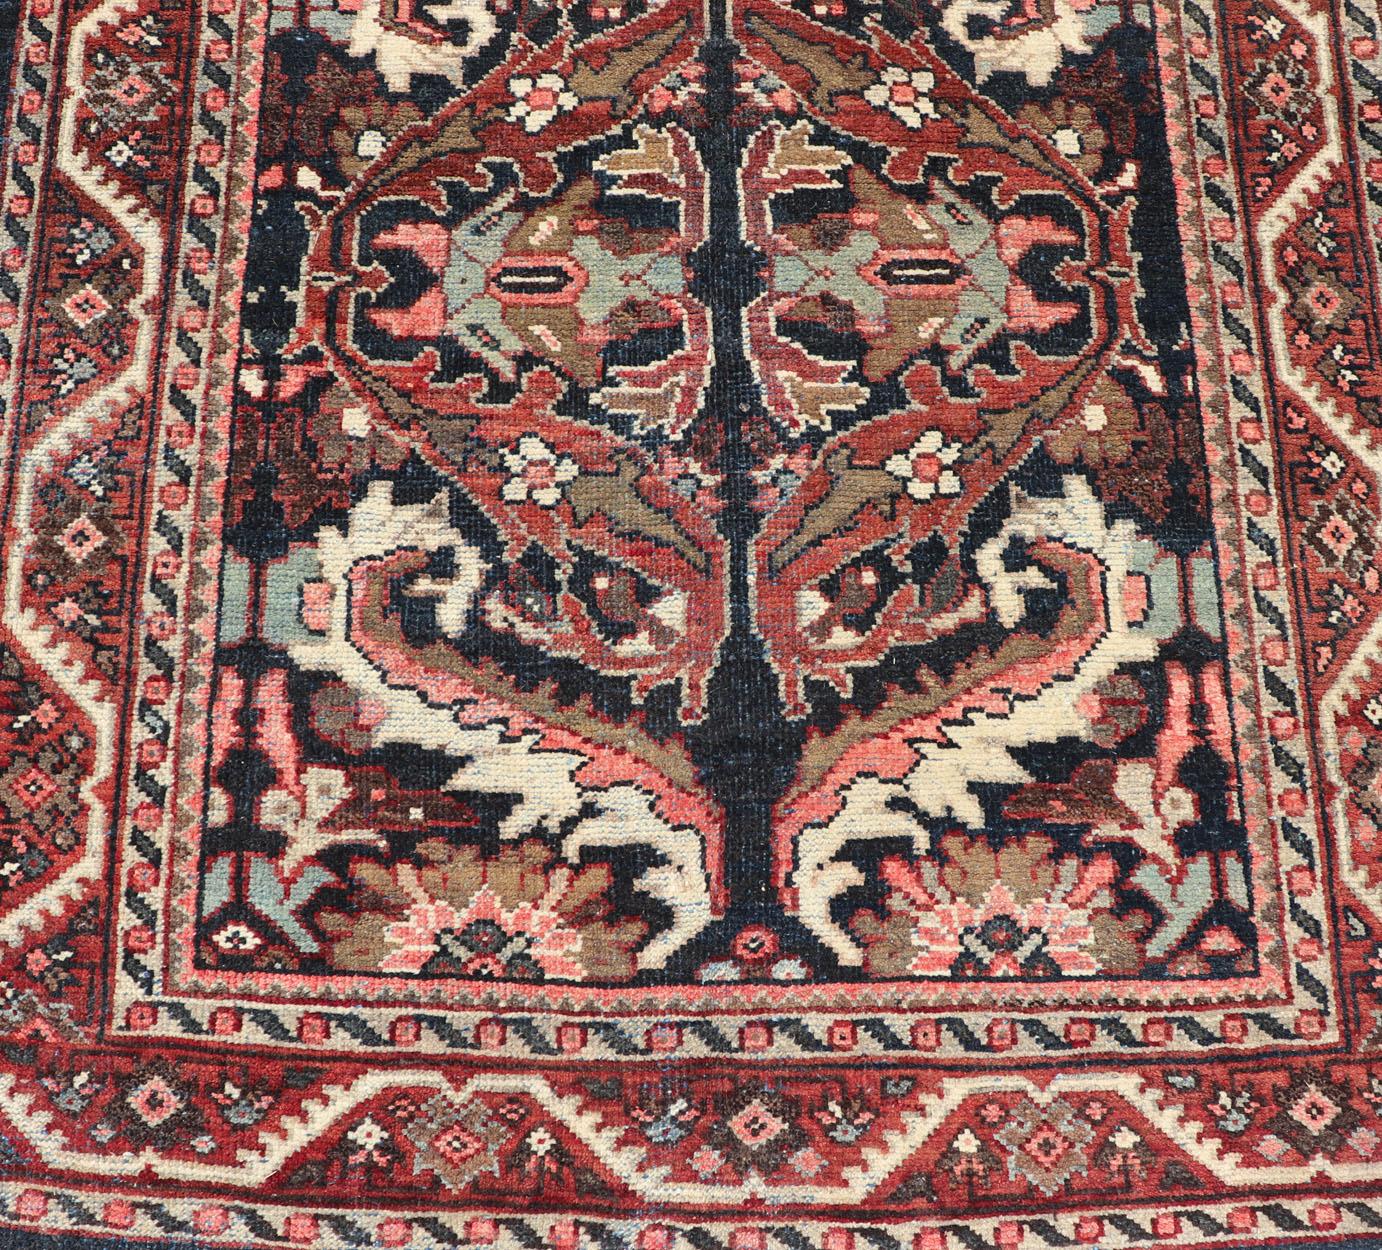 Layered Medallion design Mahal vintage rug from Persia in multi-colors, 
Keivan Woven Arts / rug PTA-200734, country of origin / type: Iran / Mahal, circa 1950

Measures: 4'8 x 9'10.